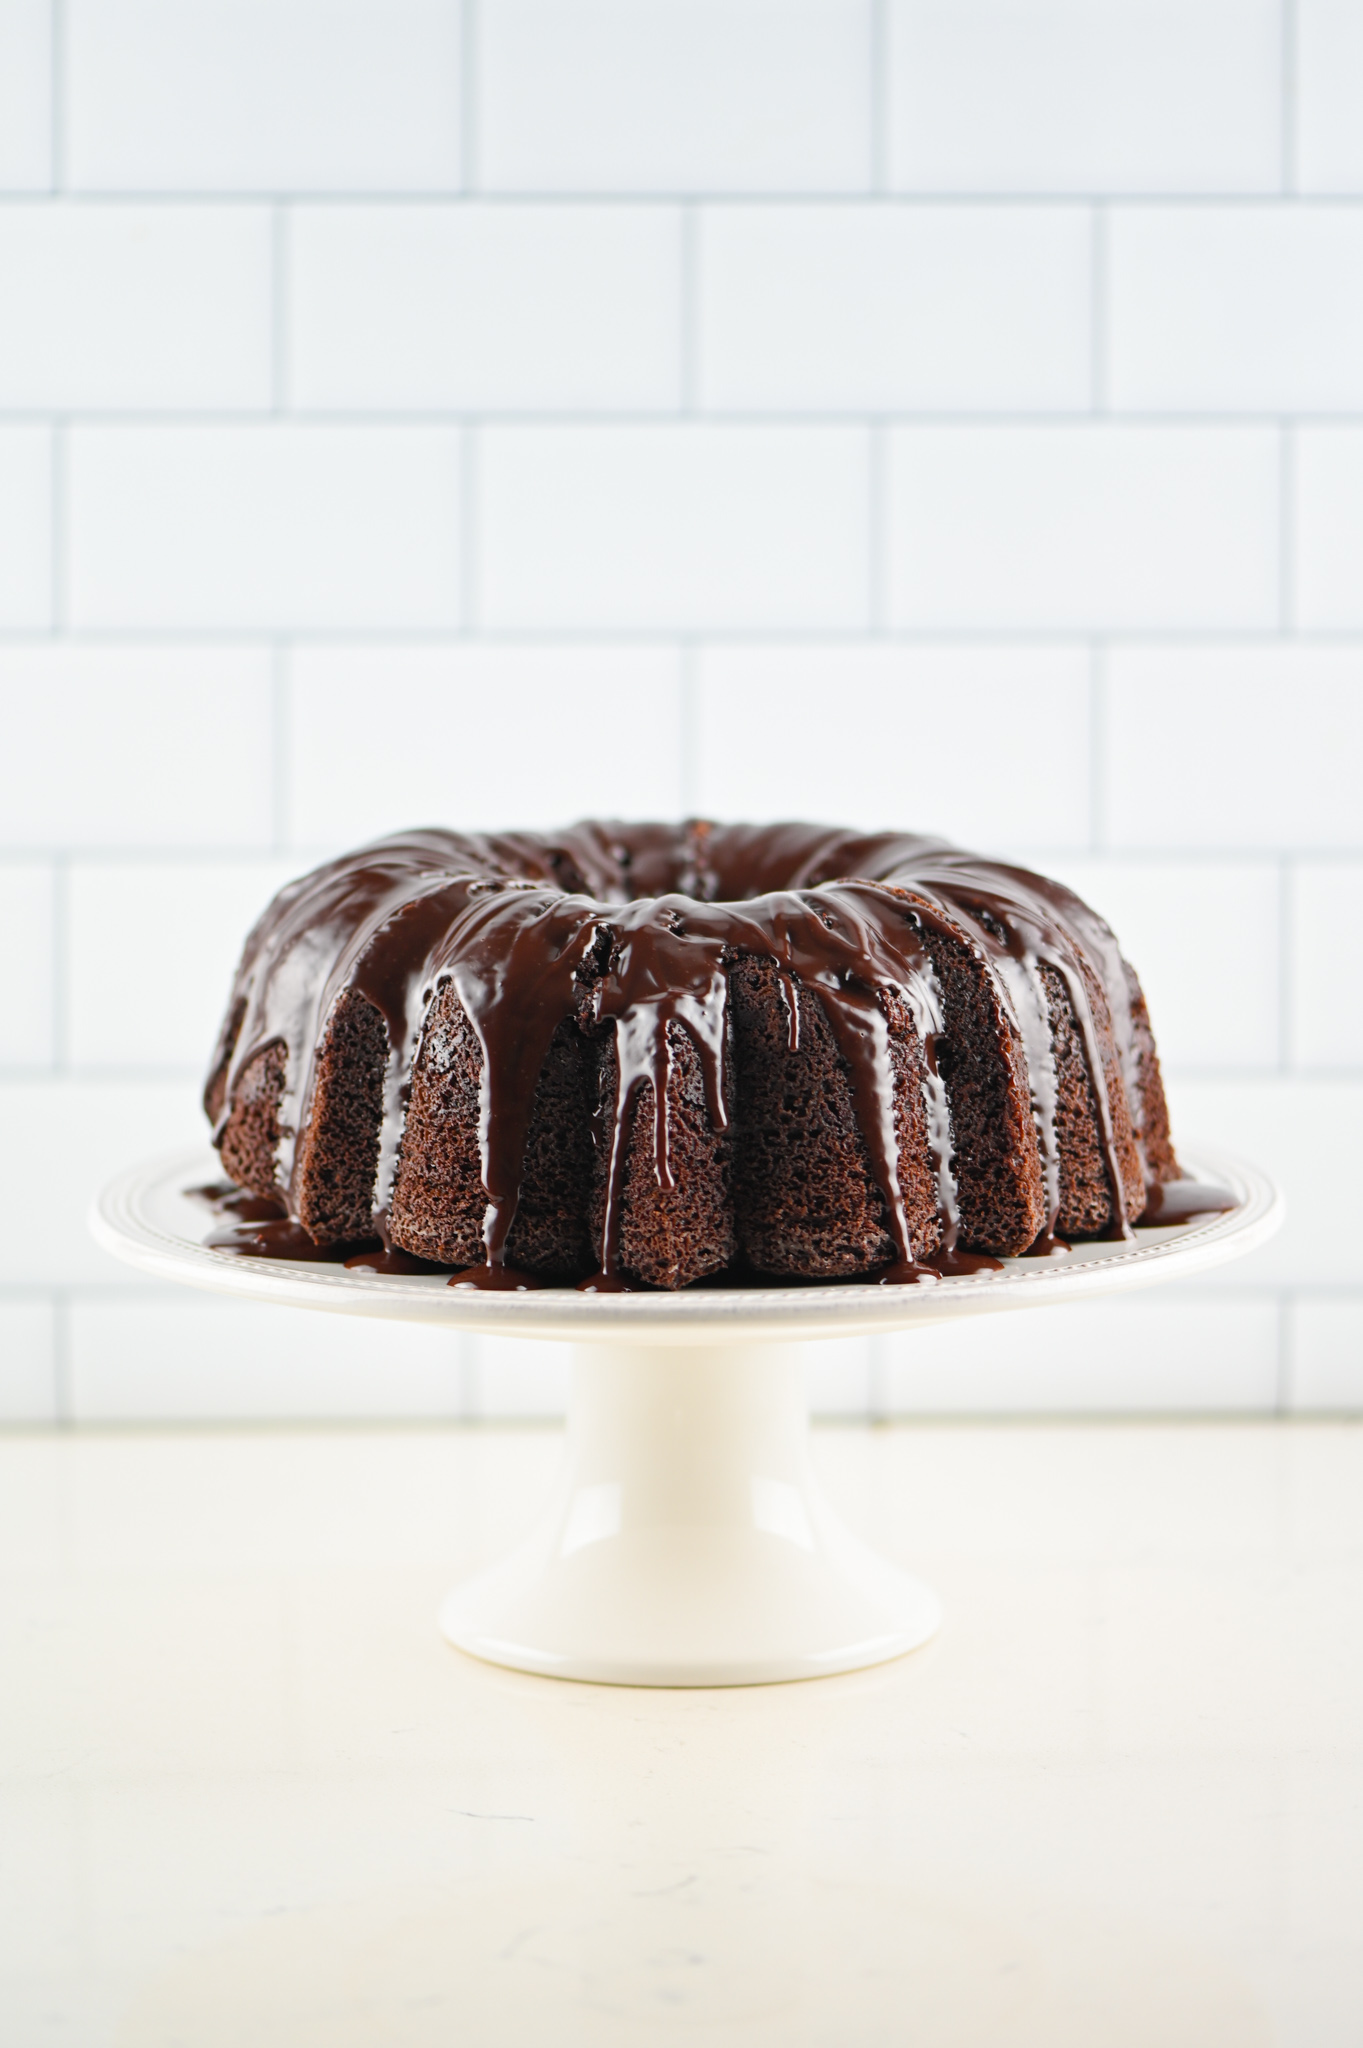 Easy Pudding Cake Recipes - Cake With Pudding Mix